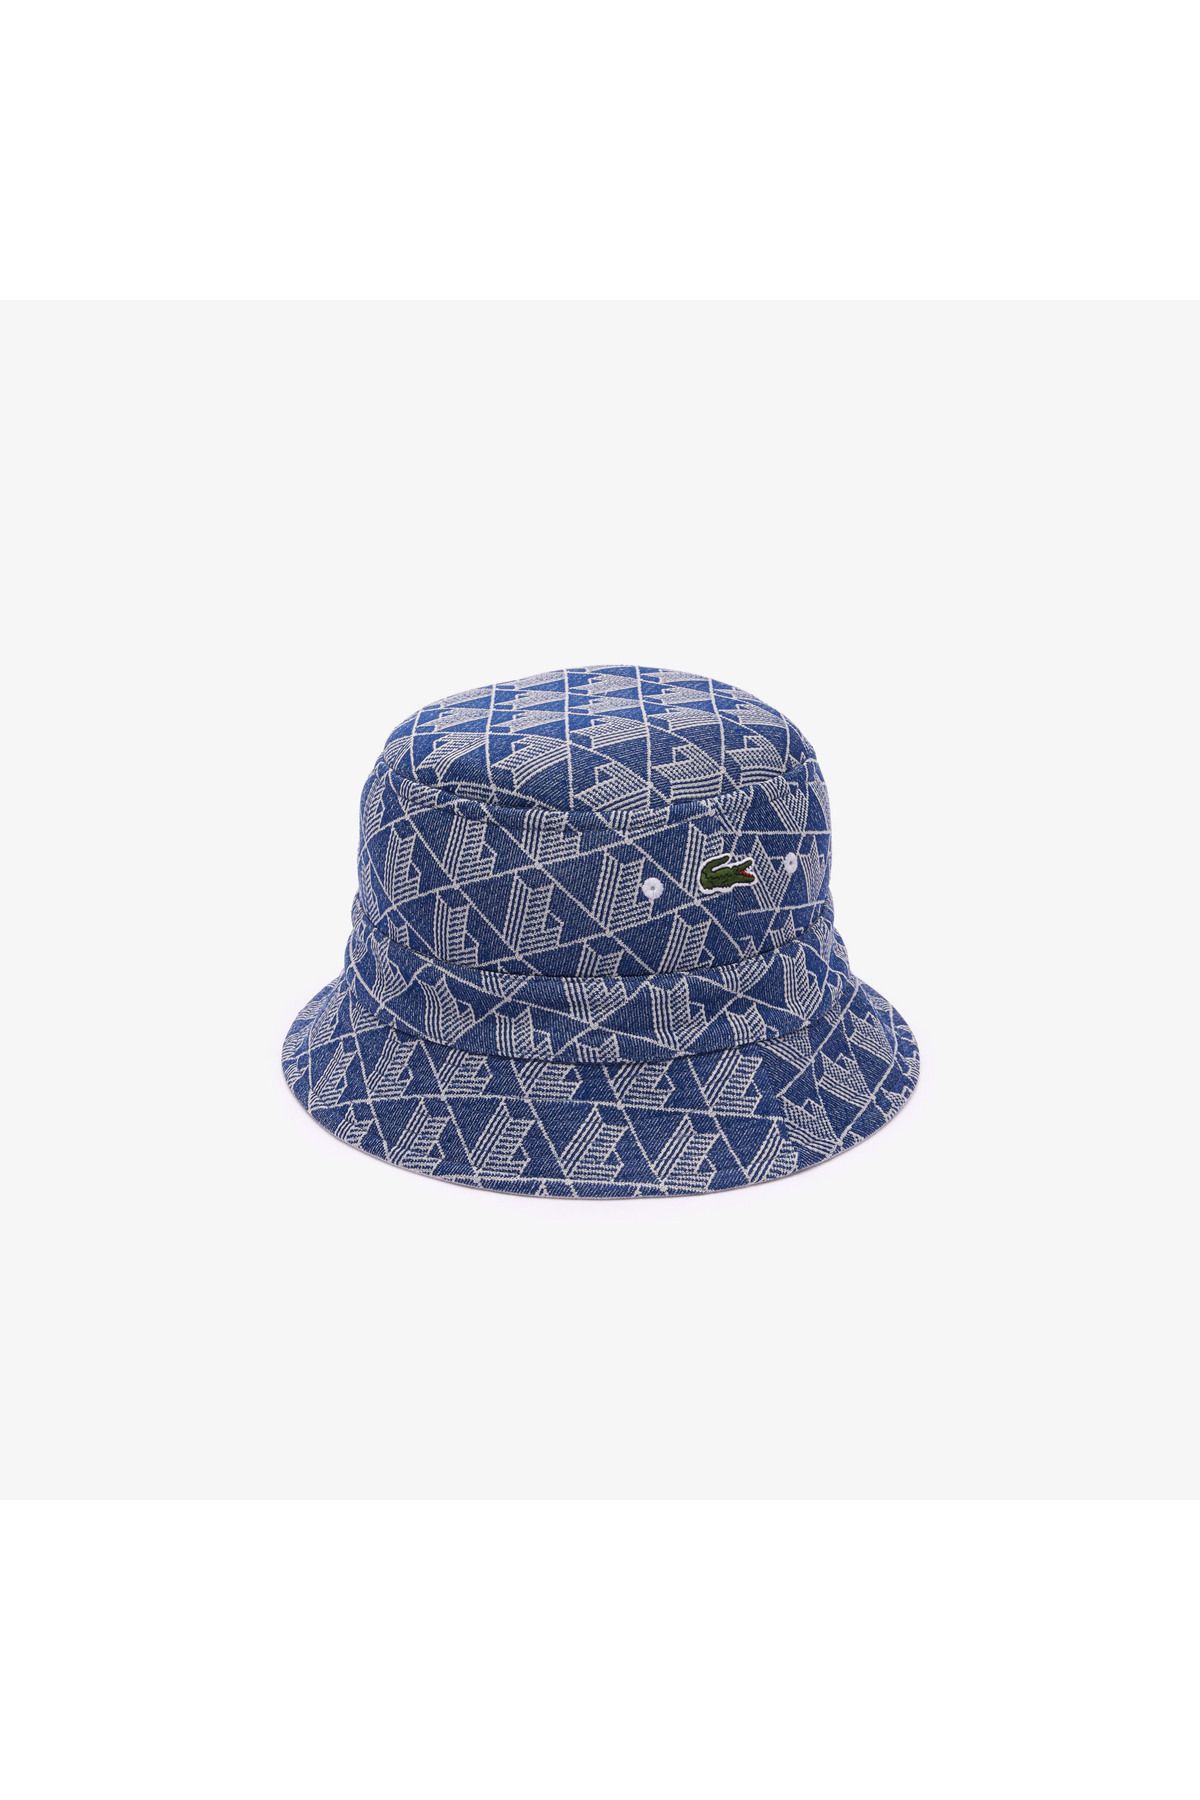 Lacoste Unisex Monogram Çift Taraflı Lacivert Şapka